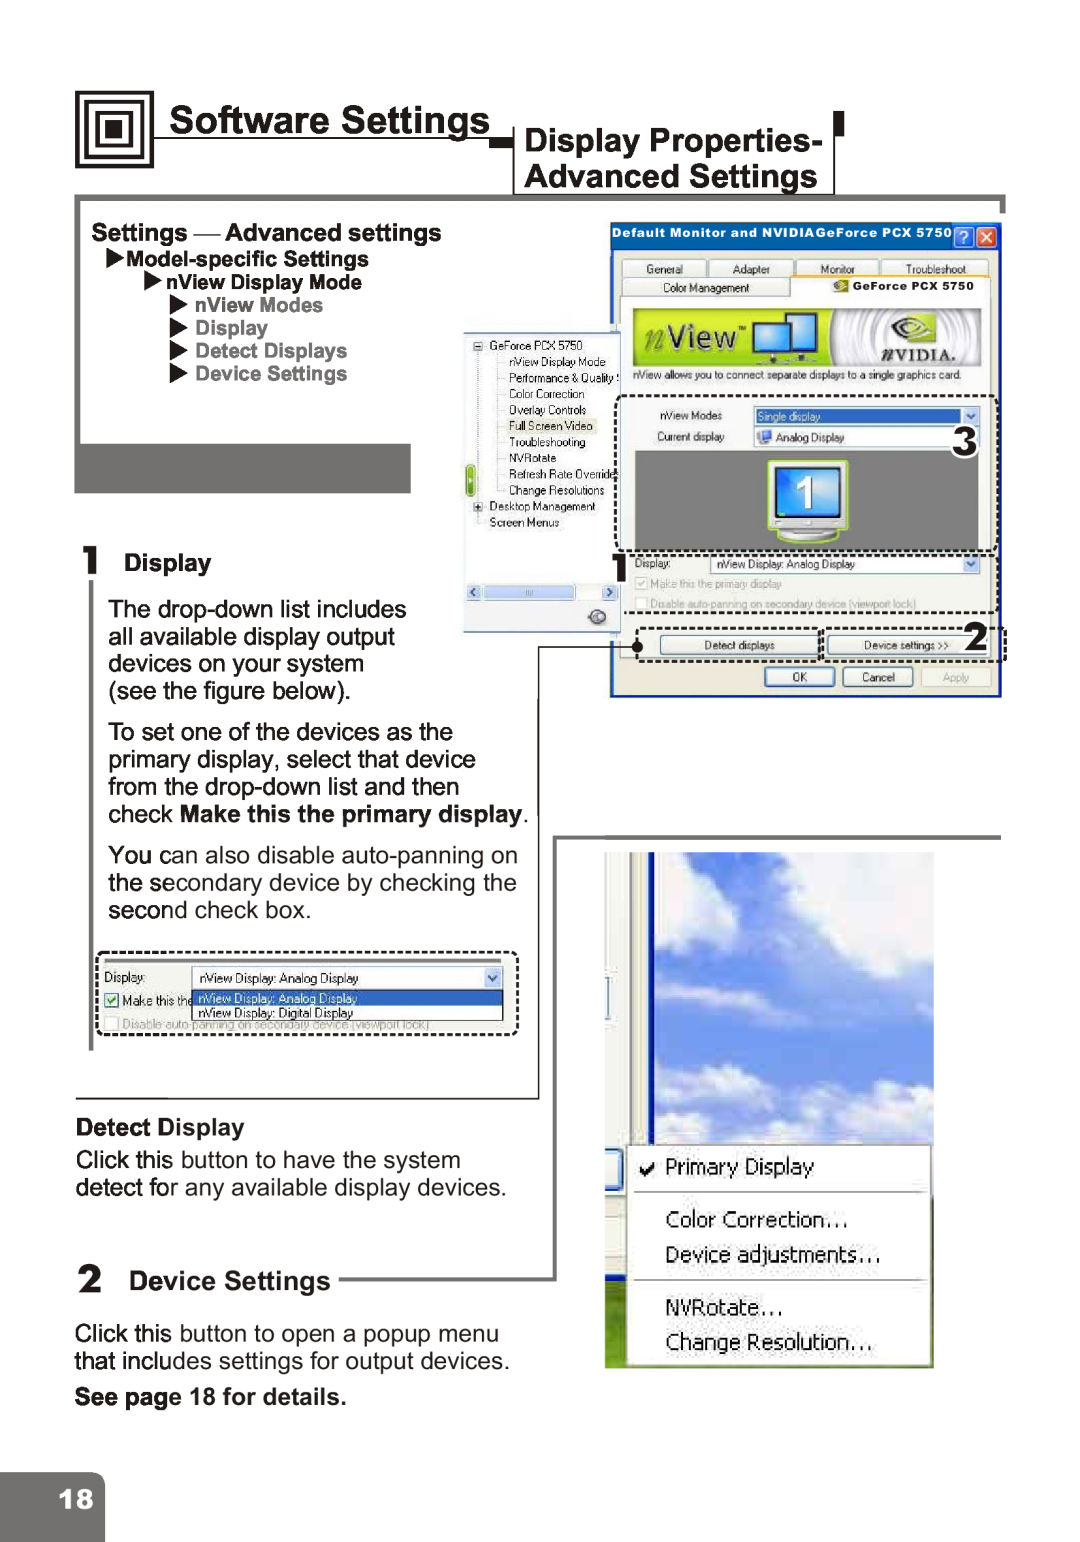 Nvidia PCI Express Series user manual Software Settings Display Properties, Advanced Settings, Device Settings, Display1 